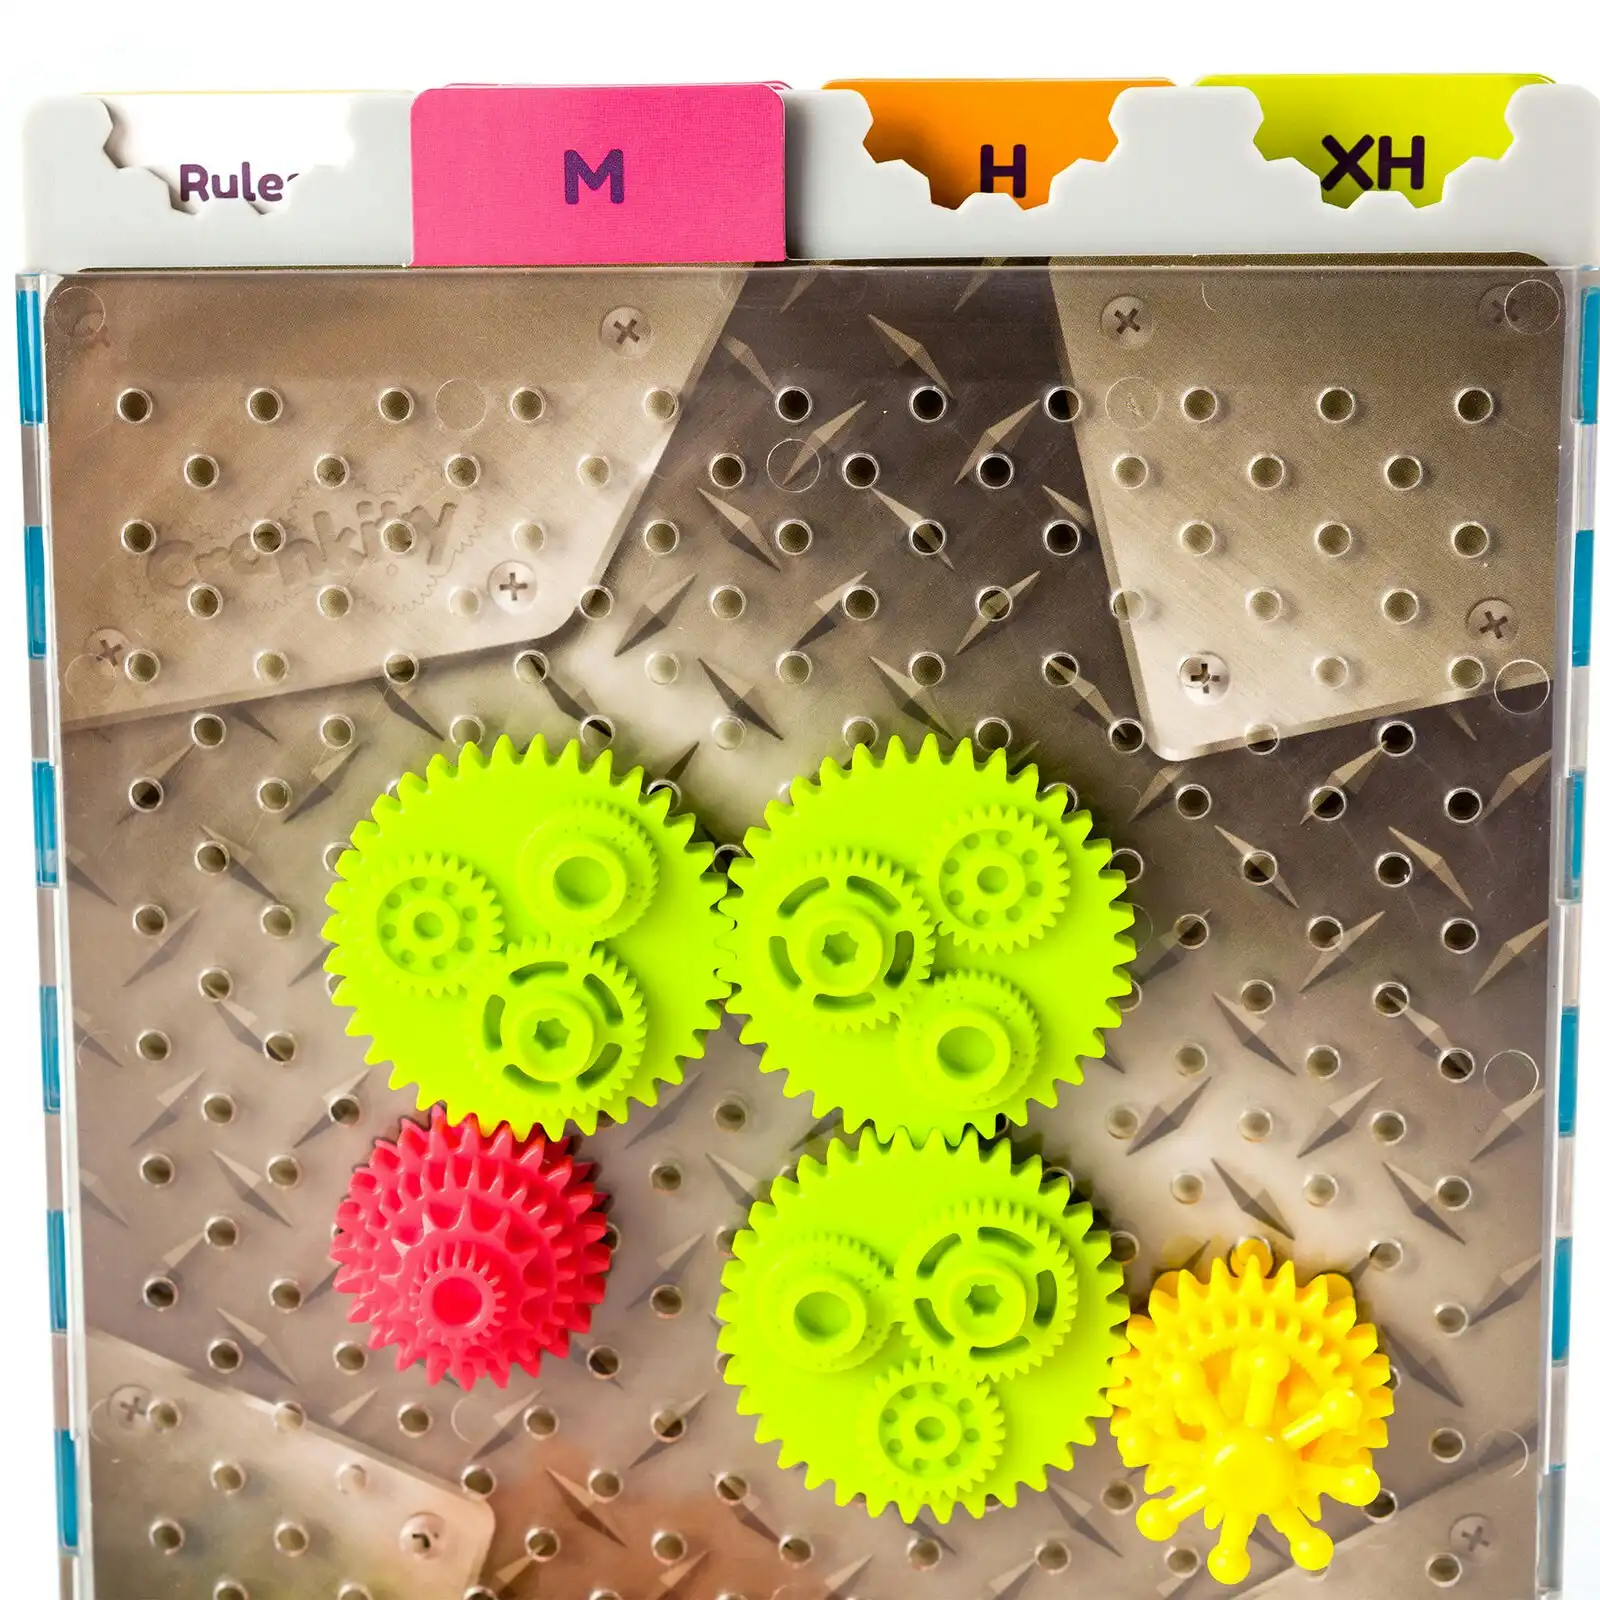 Fat Brain Toy Co. Crankity Brainteaser Kids/Children Puzzle Educational Toy 6y+